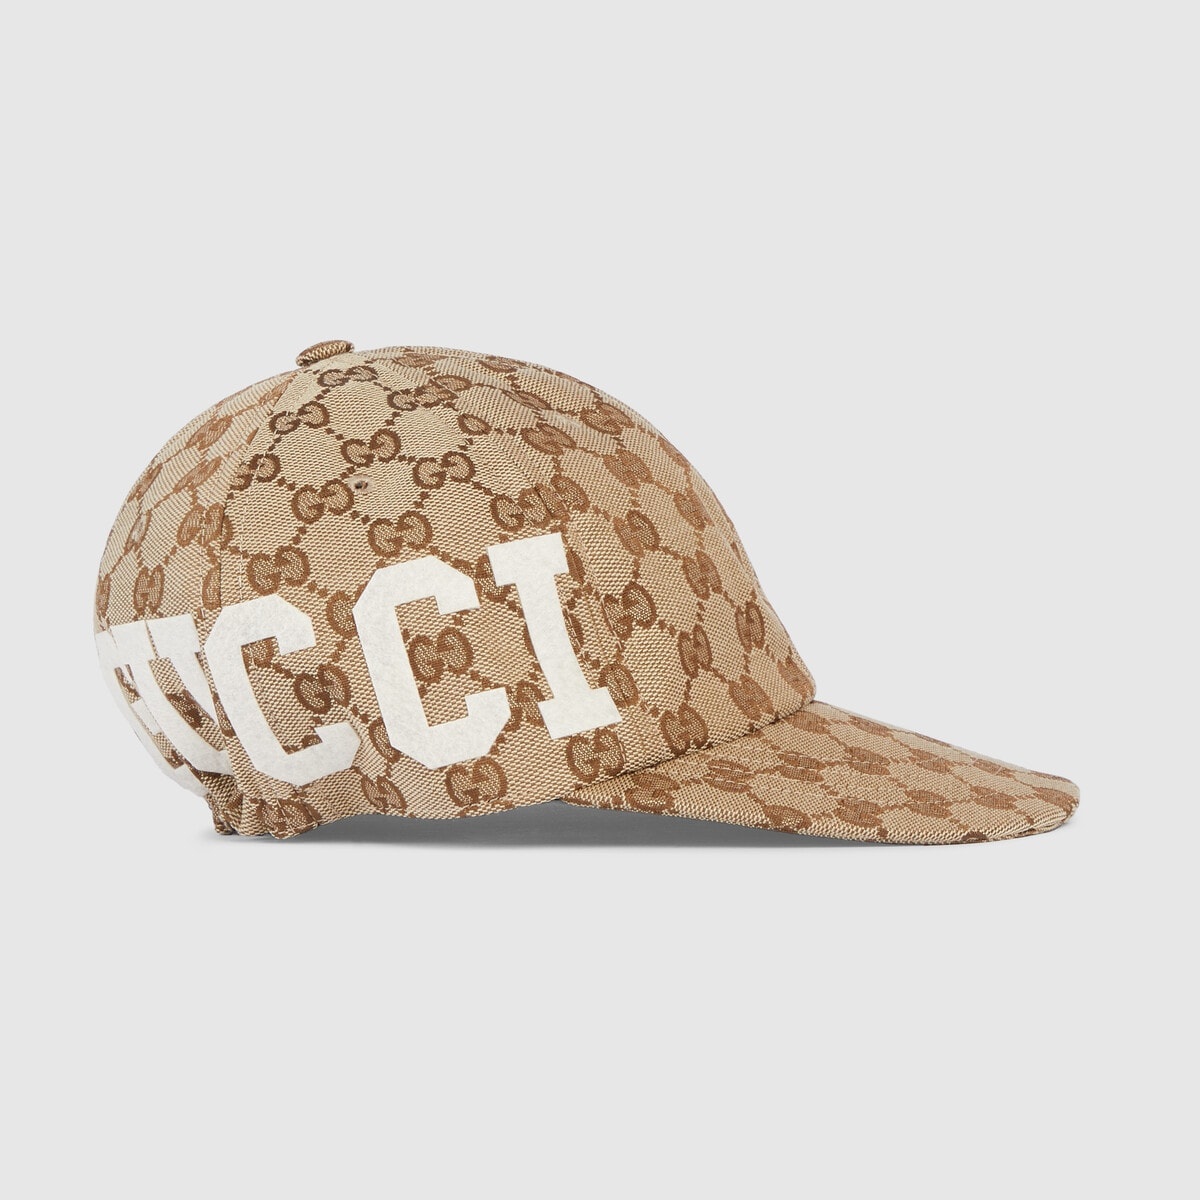 GG cotton canvas baseball hat - 4